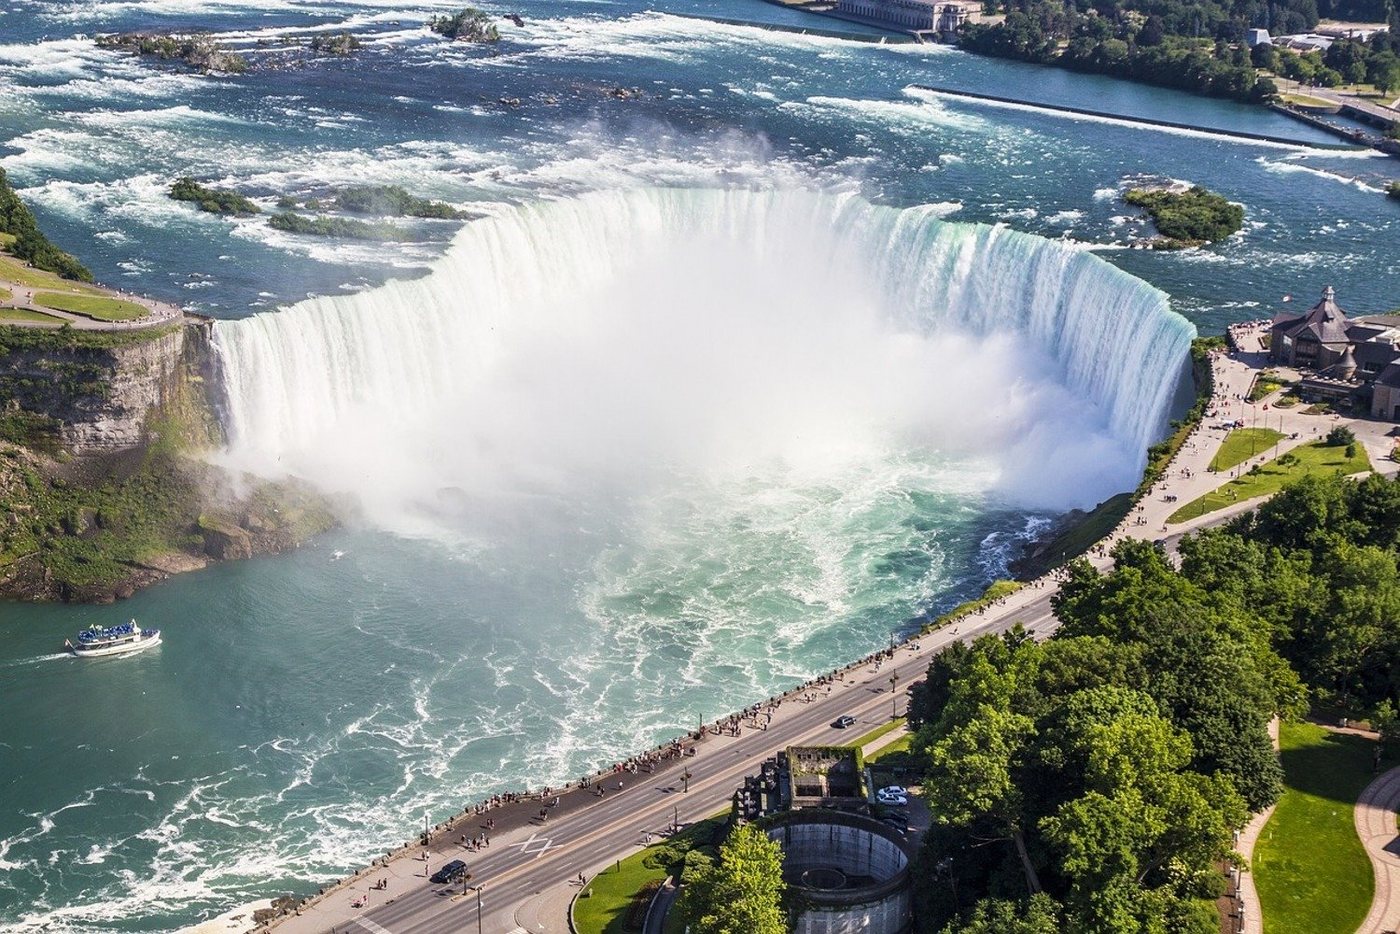 meberg Fototapete, Wasser, Fototapete Atemberaubender Wasserfall Wandbild Vliestapete Motiv 200x300 cm Niagara Wasser Natur von meberg